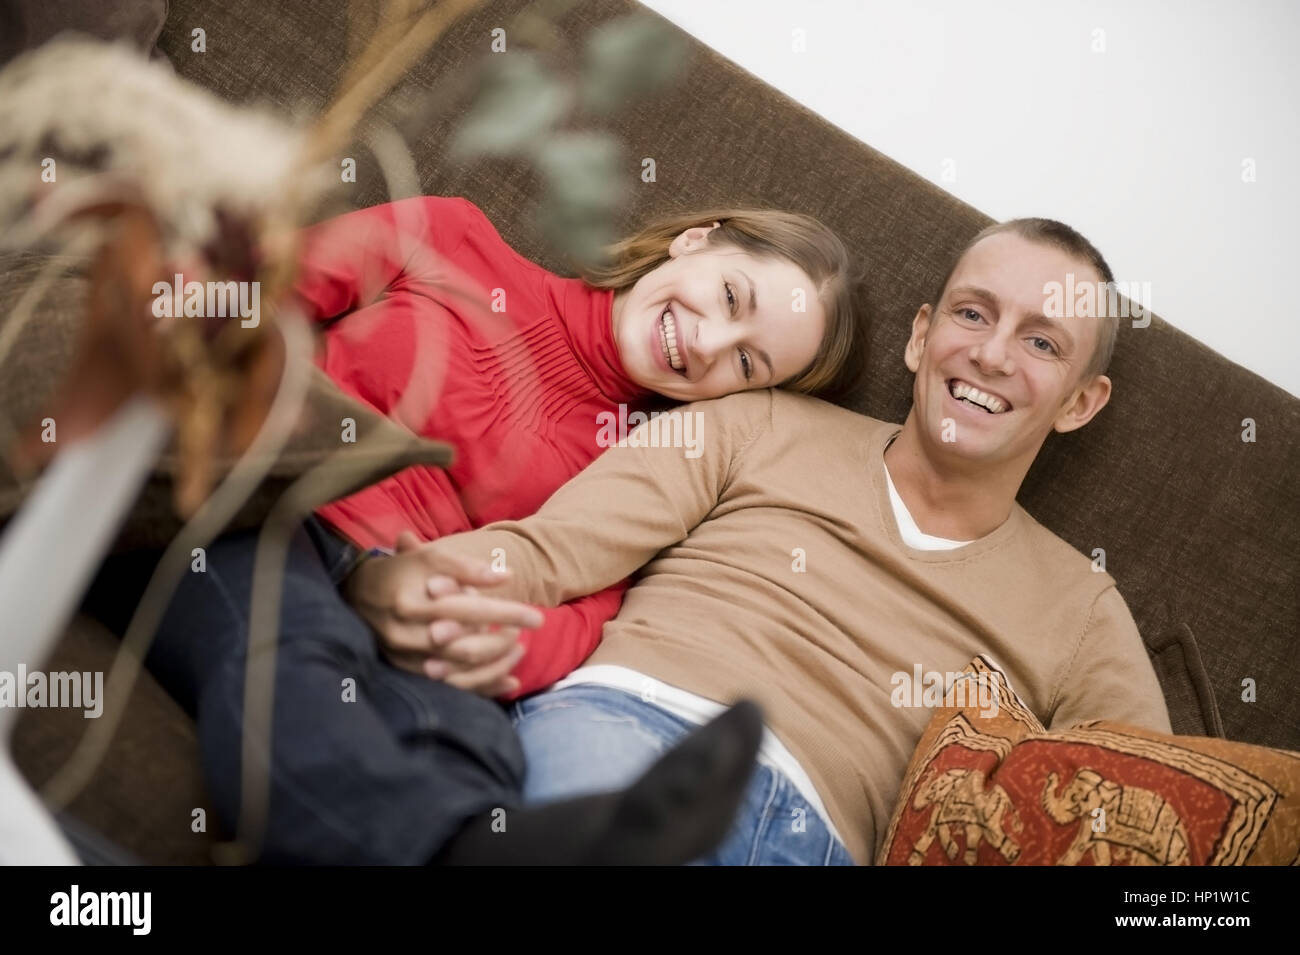 Model release , Liebespaar sitzt gemeinsam auf der Couch - love couple sitting on a couch at home Stock Photo